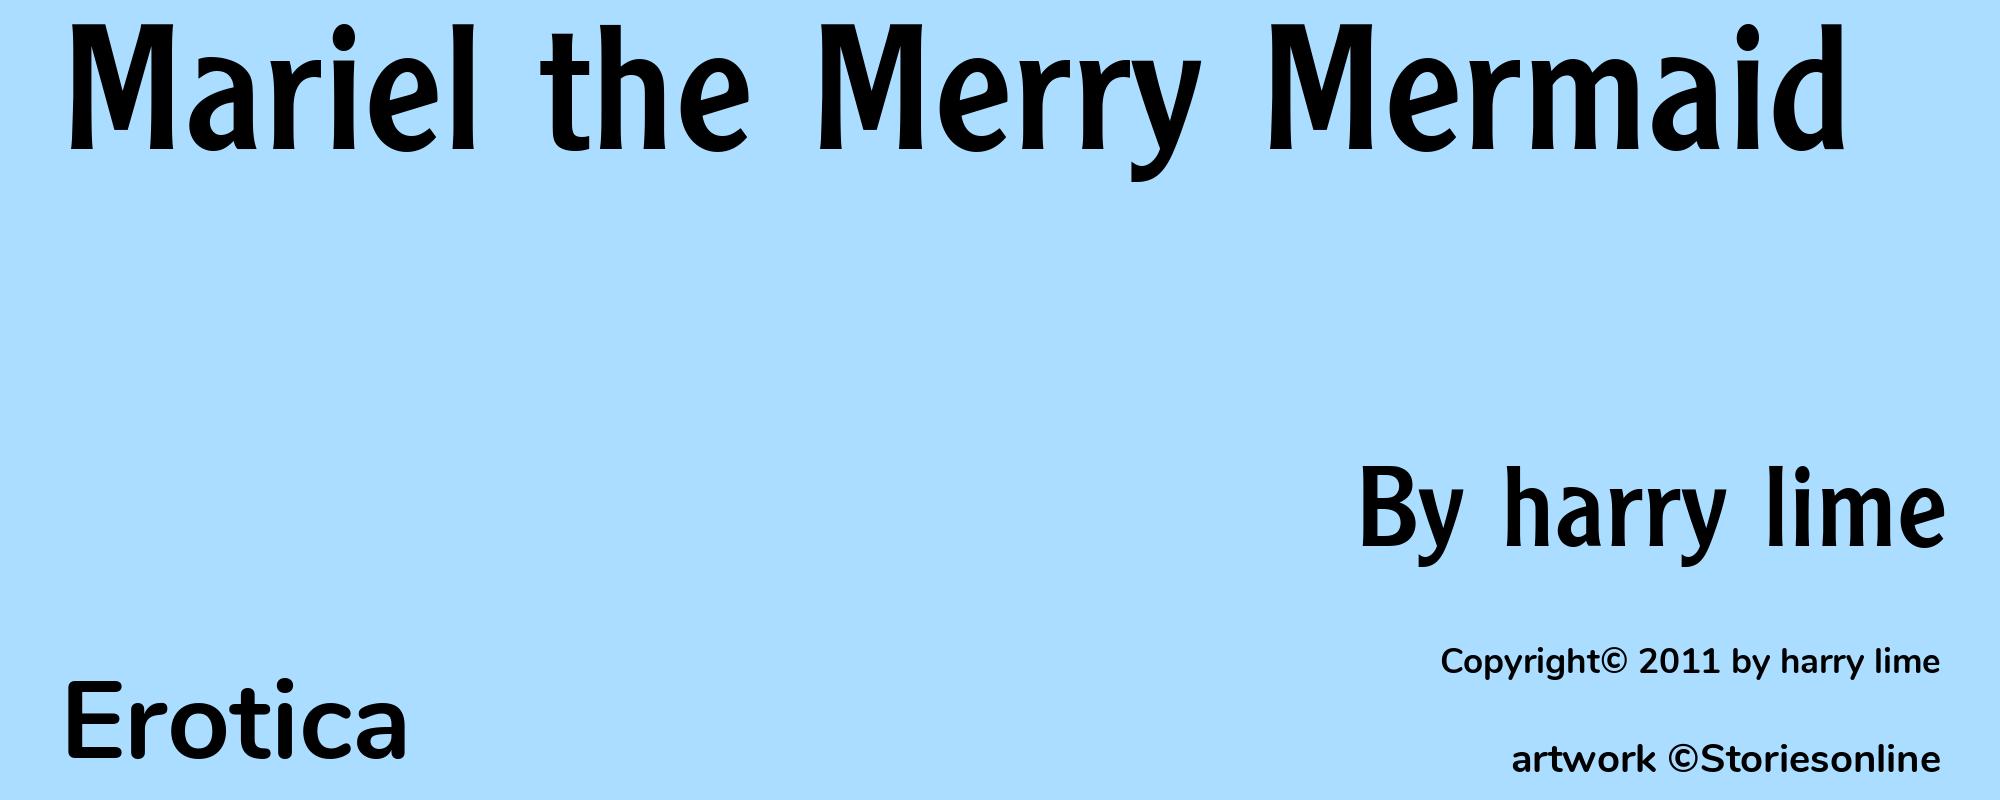 Mariel the Merry Mermaid - Cover